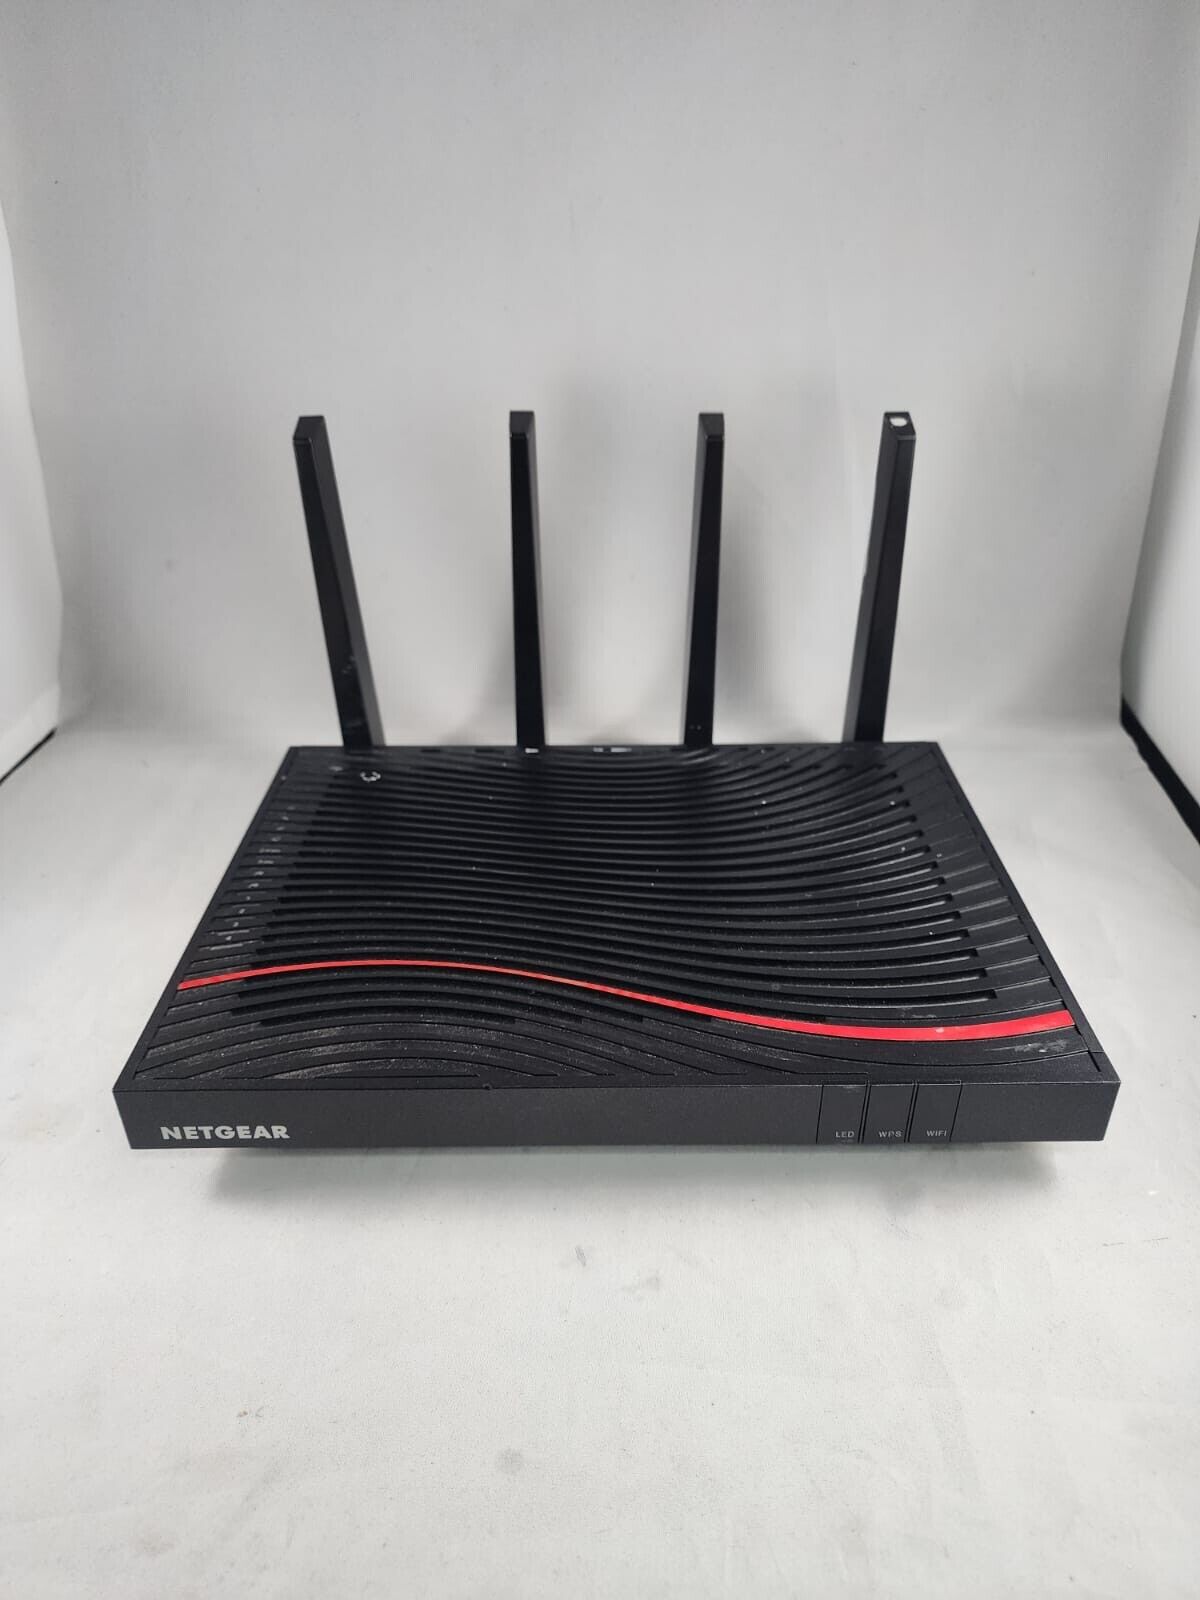 Netgear Nighthawk X4S (C7800 ) AC3200 WiFi Cable Modem Router